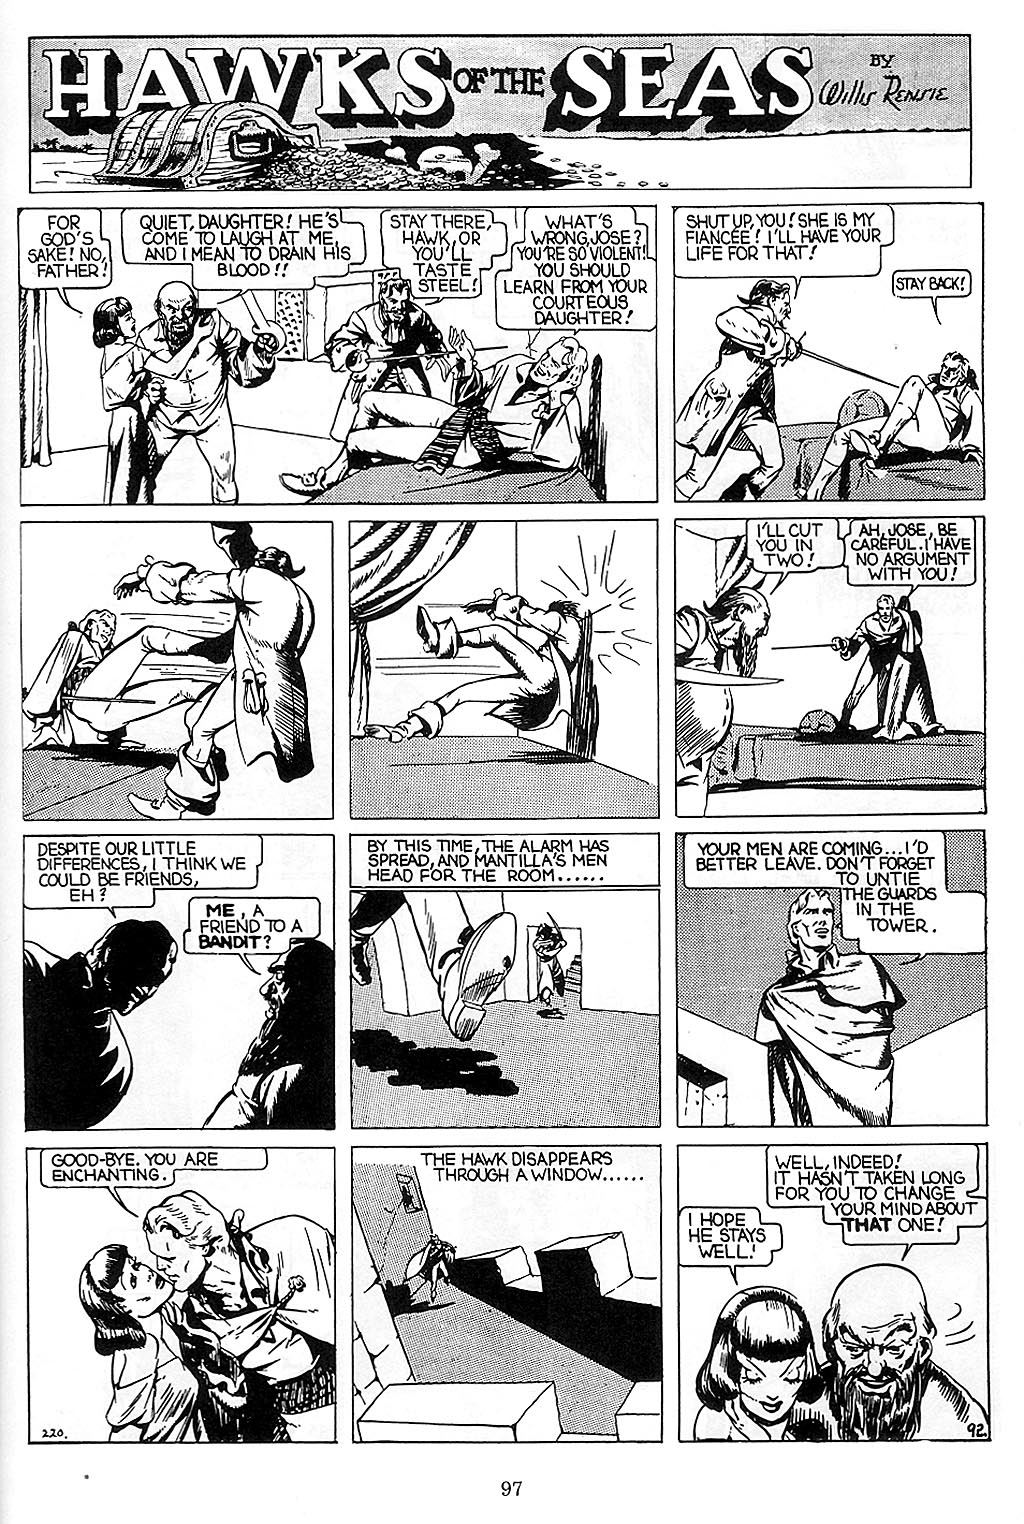 Read online Will Eisner's Hawks of the Seas comic -  Issue # TPB - 98